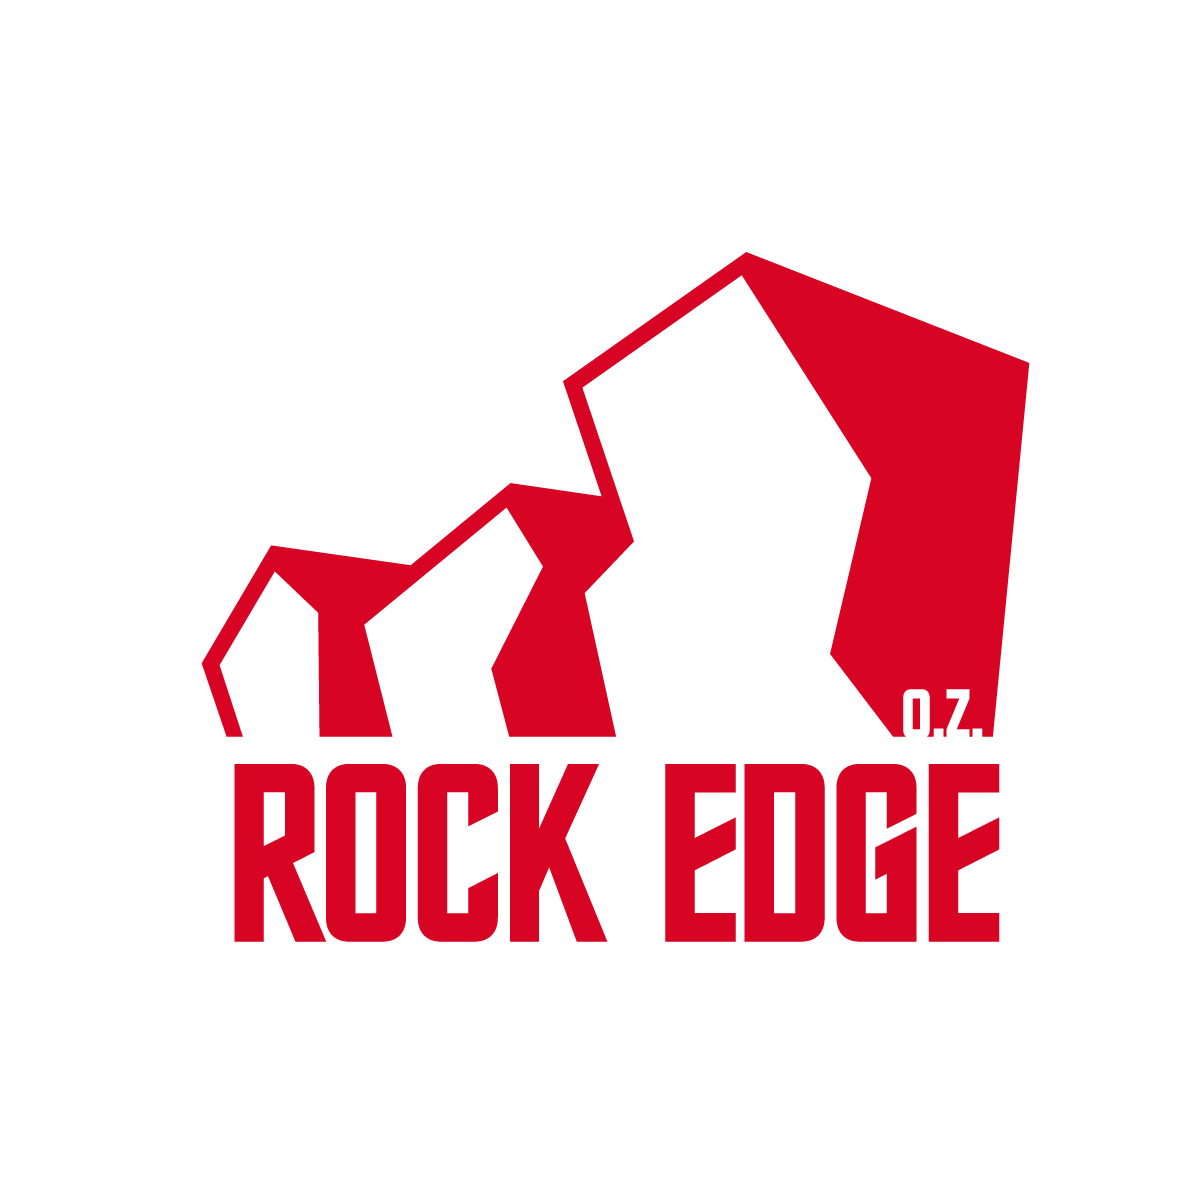 rockedge